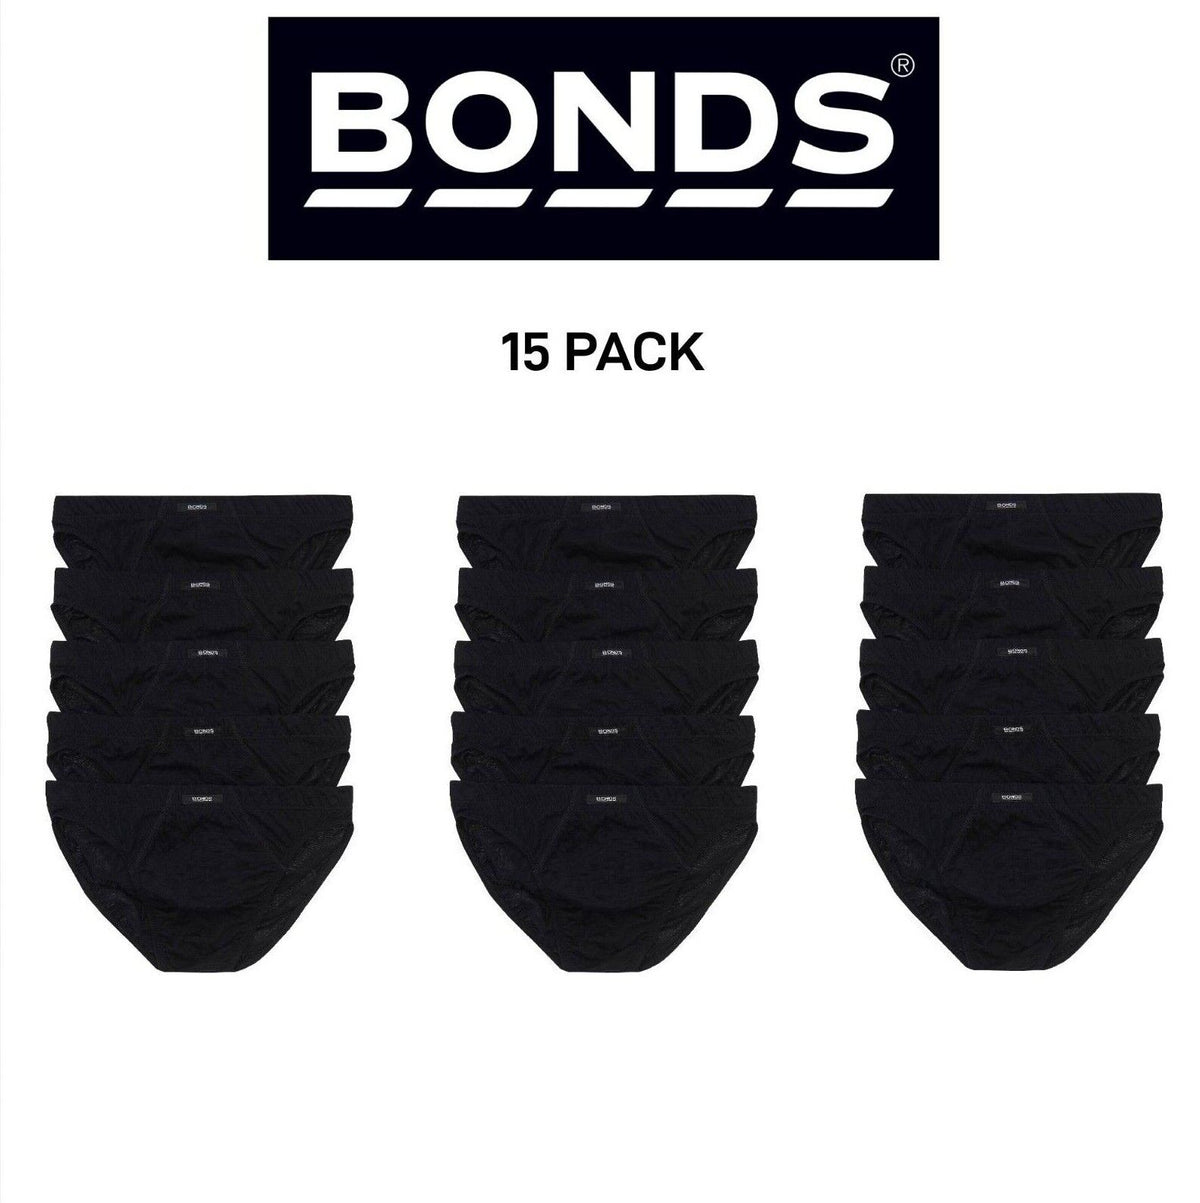 Bonds Mens Action Brief Soft Cotton and Encased Elastic Comfort 15 Pack M8OS5I